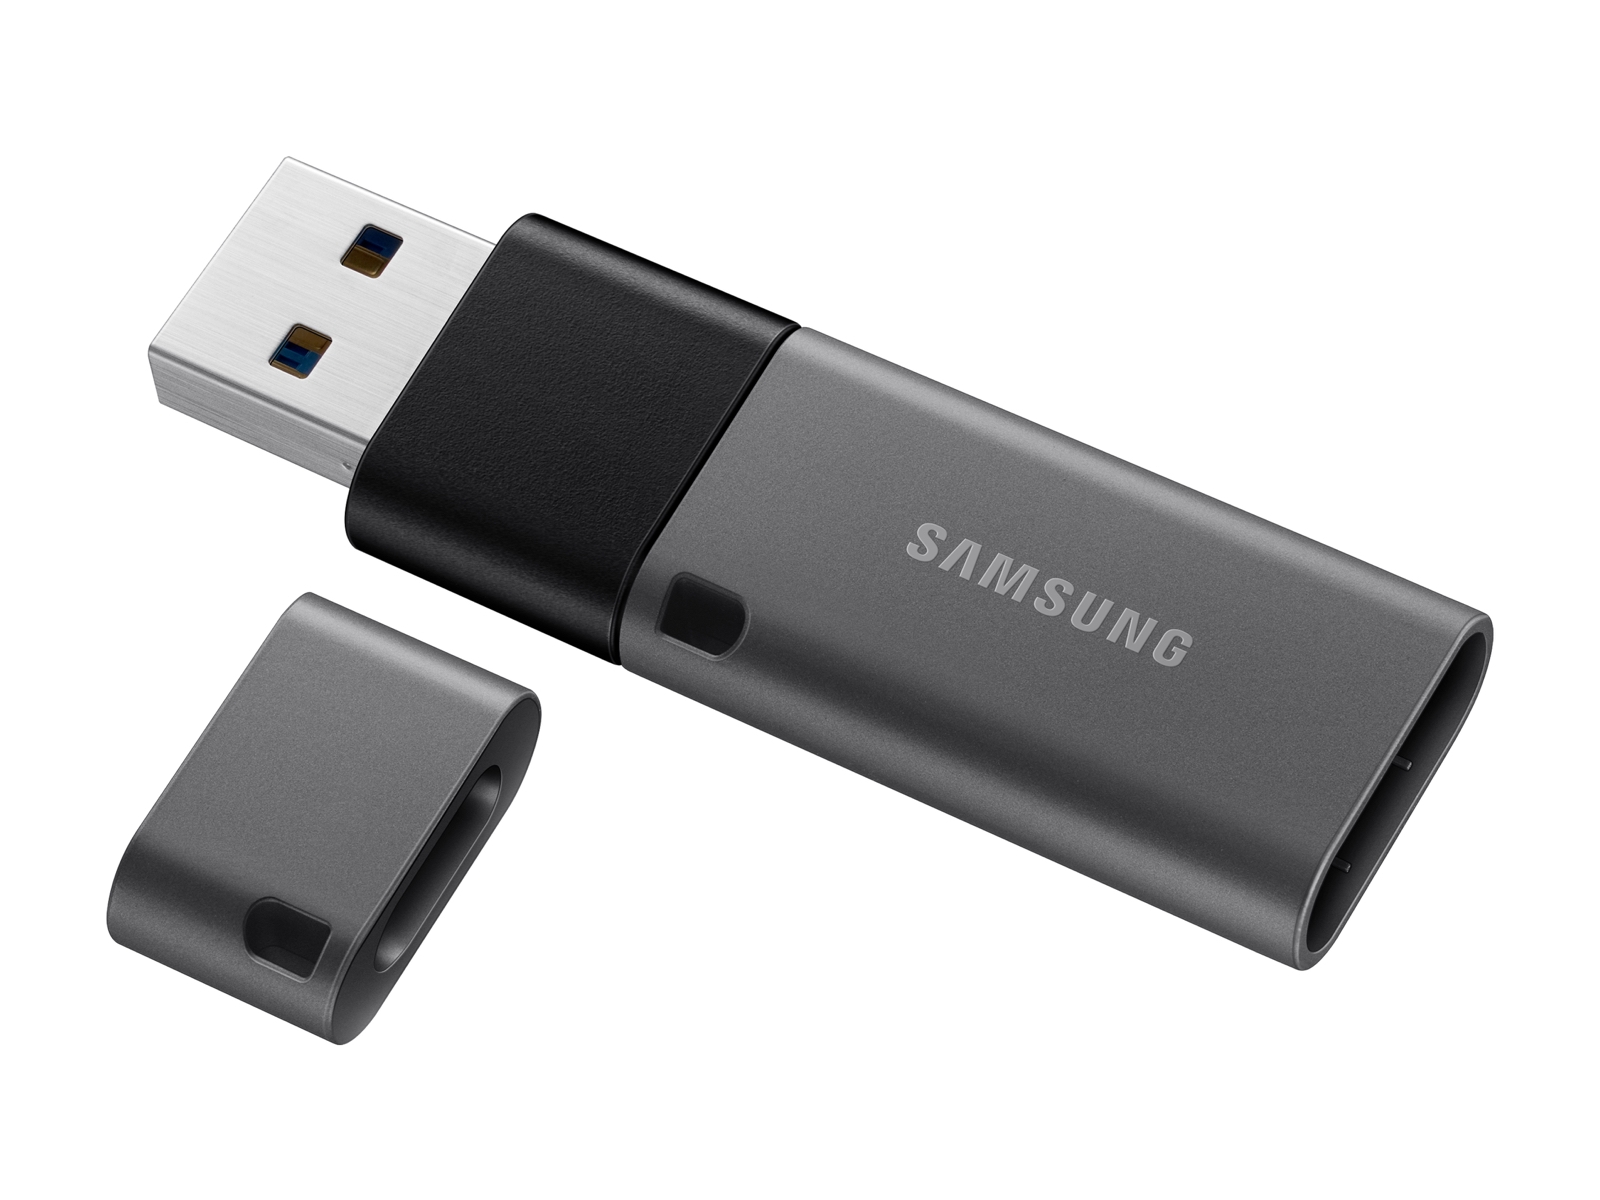 USB 3.1 Flash Drive DUO Plus 64GB Memory & Storage - MUF-64DB/AM | Samsung